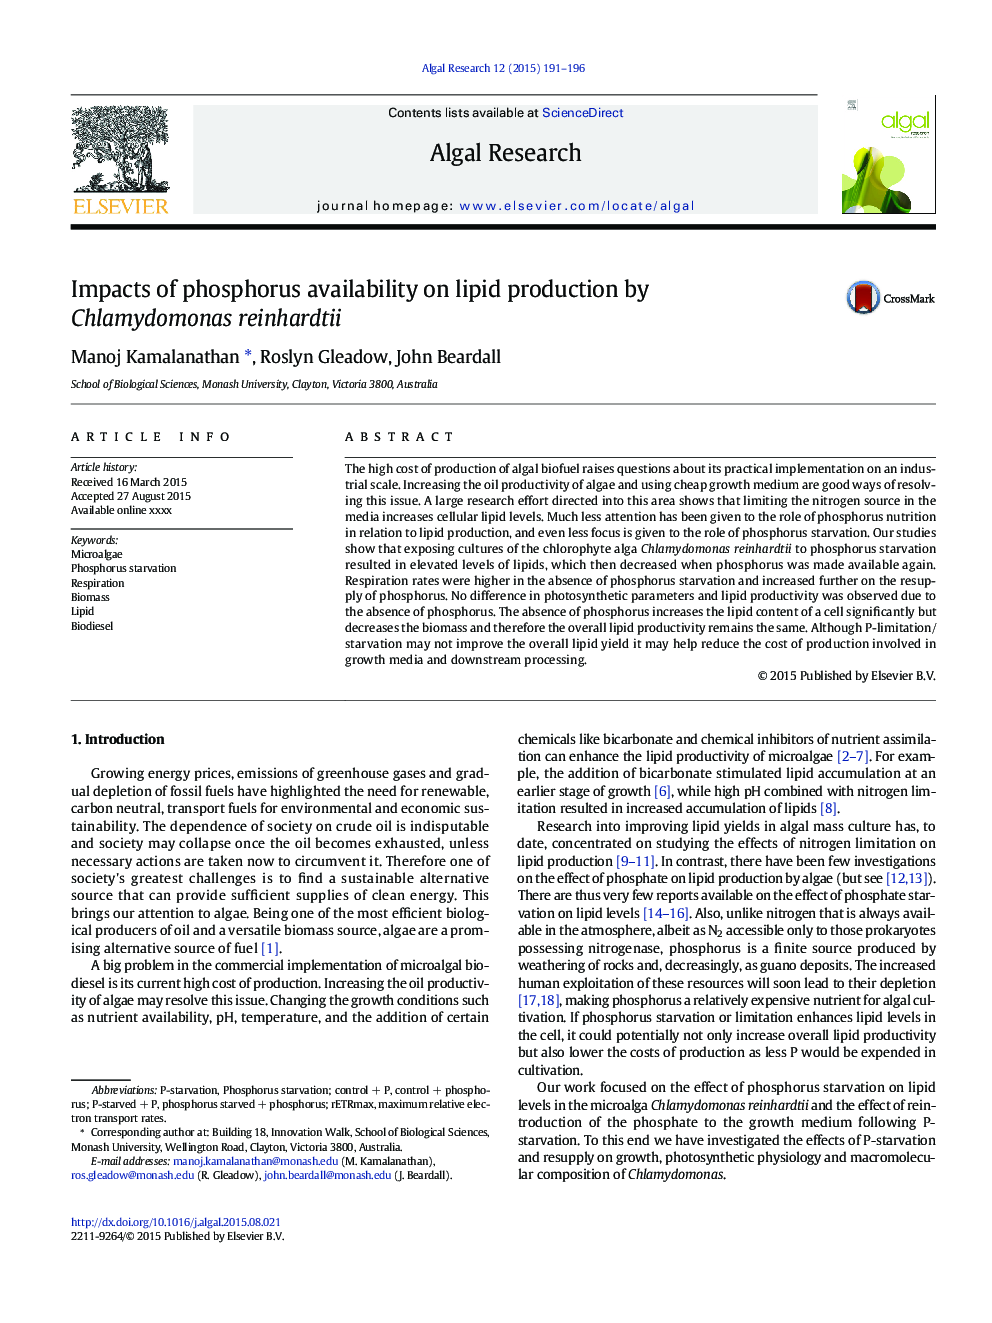 Impacts of phosphorus availability on lipid production by Chlamydomonas reinhardtii